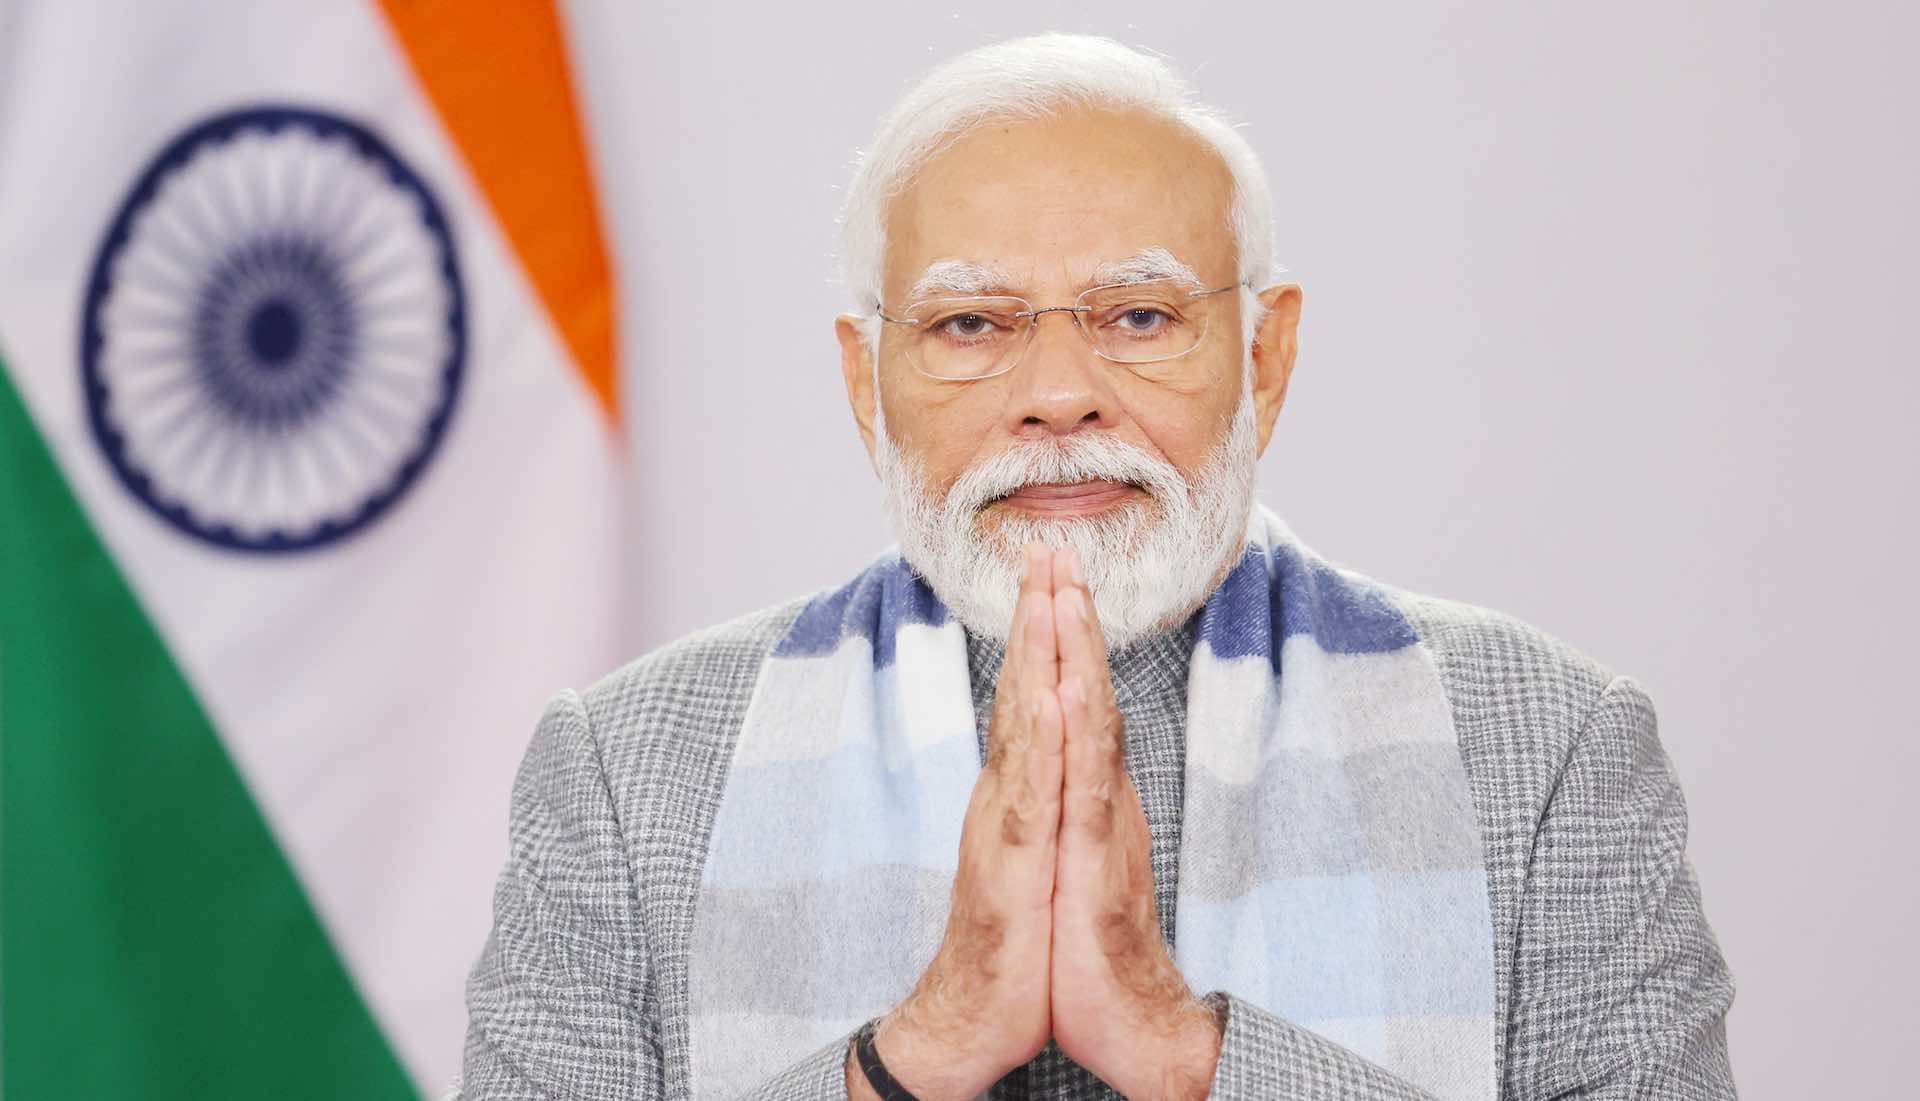 PM Modi's victory marks new era for India's development agenda